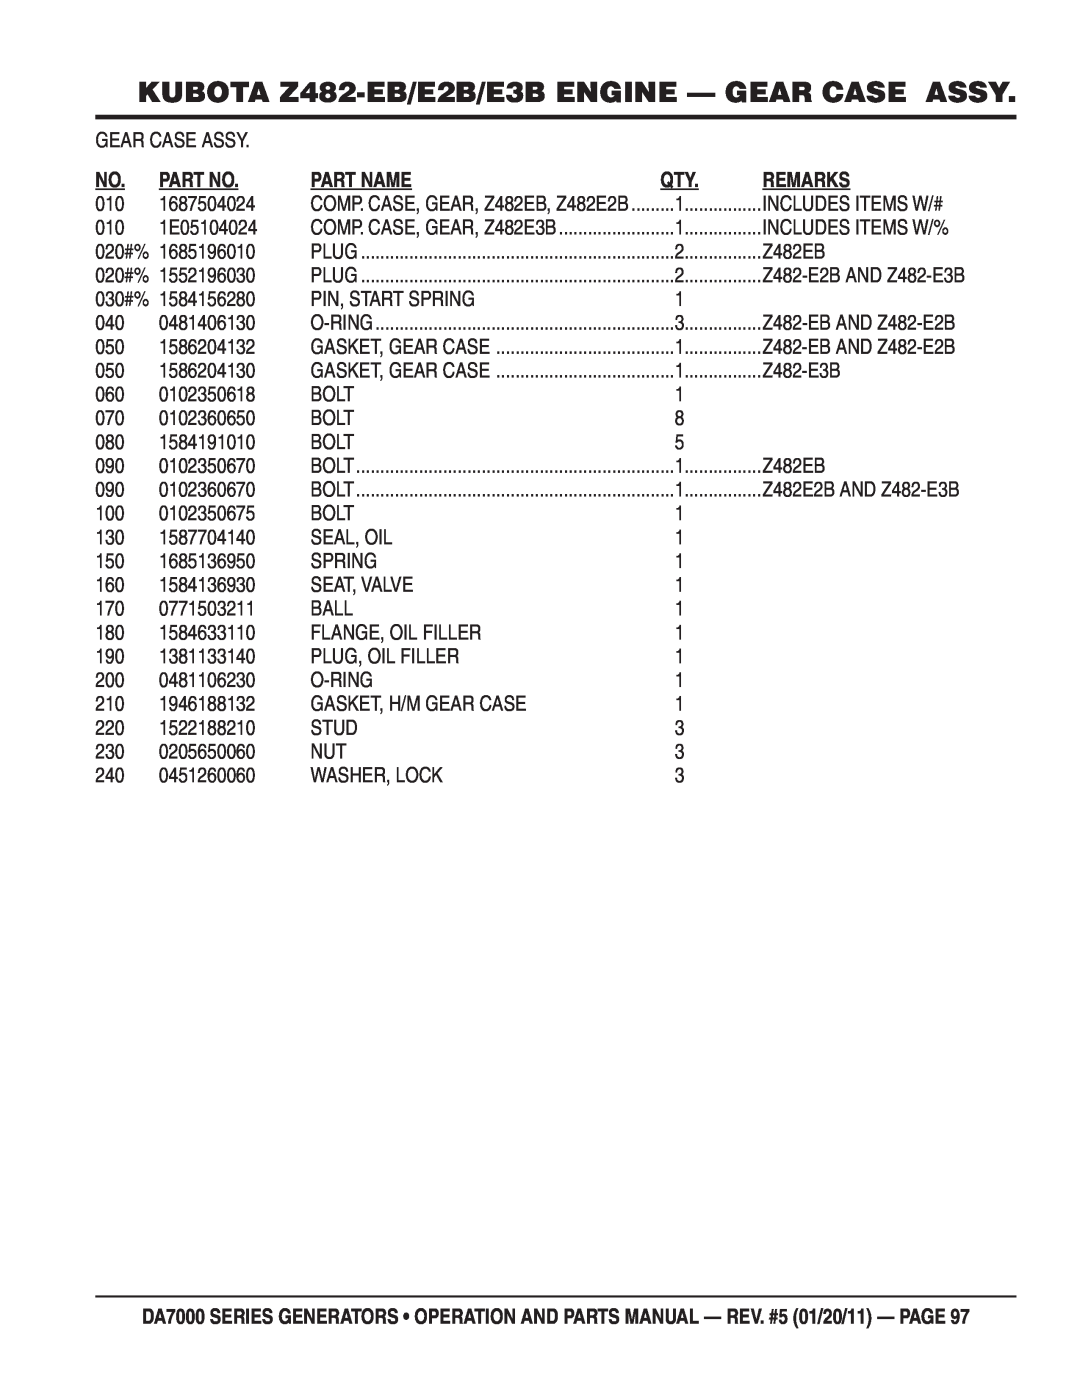 Multiquip DA700SSW manual KUBOTA Z482-EB/E2B/E3B ENGINE - GEAR CASE ASSY, Part Name, Remarks, COMP. CASE, GEAR, Z482E3B 